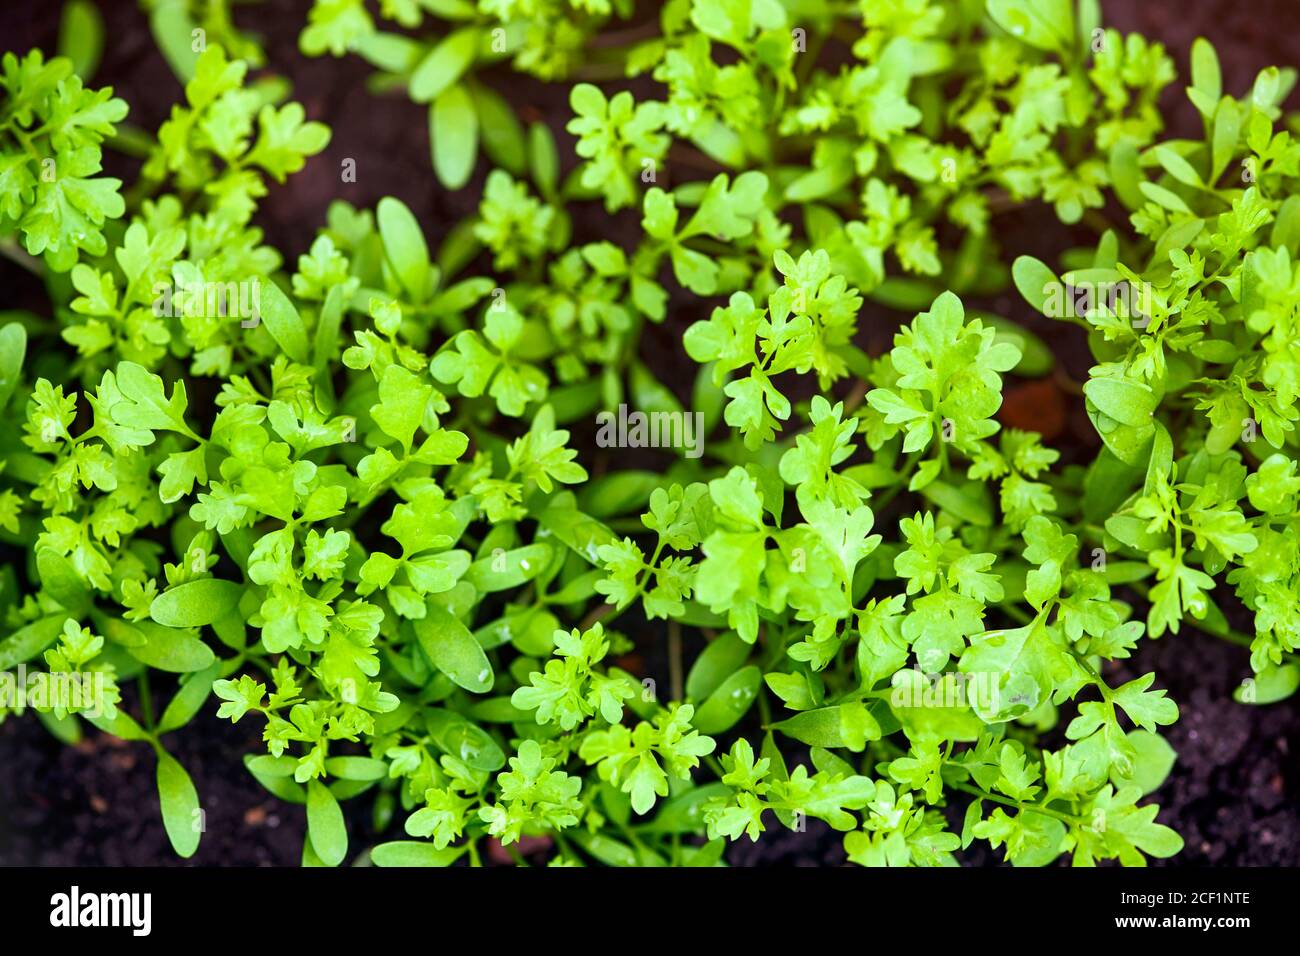 Green organic garden cress grows outdoors. Close-up Stock Photo